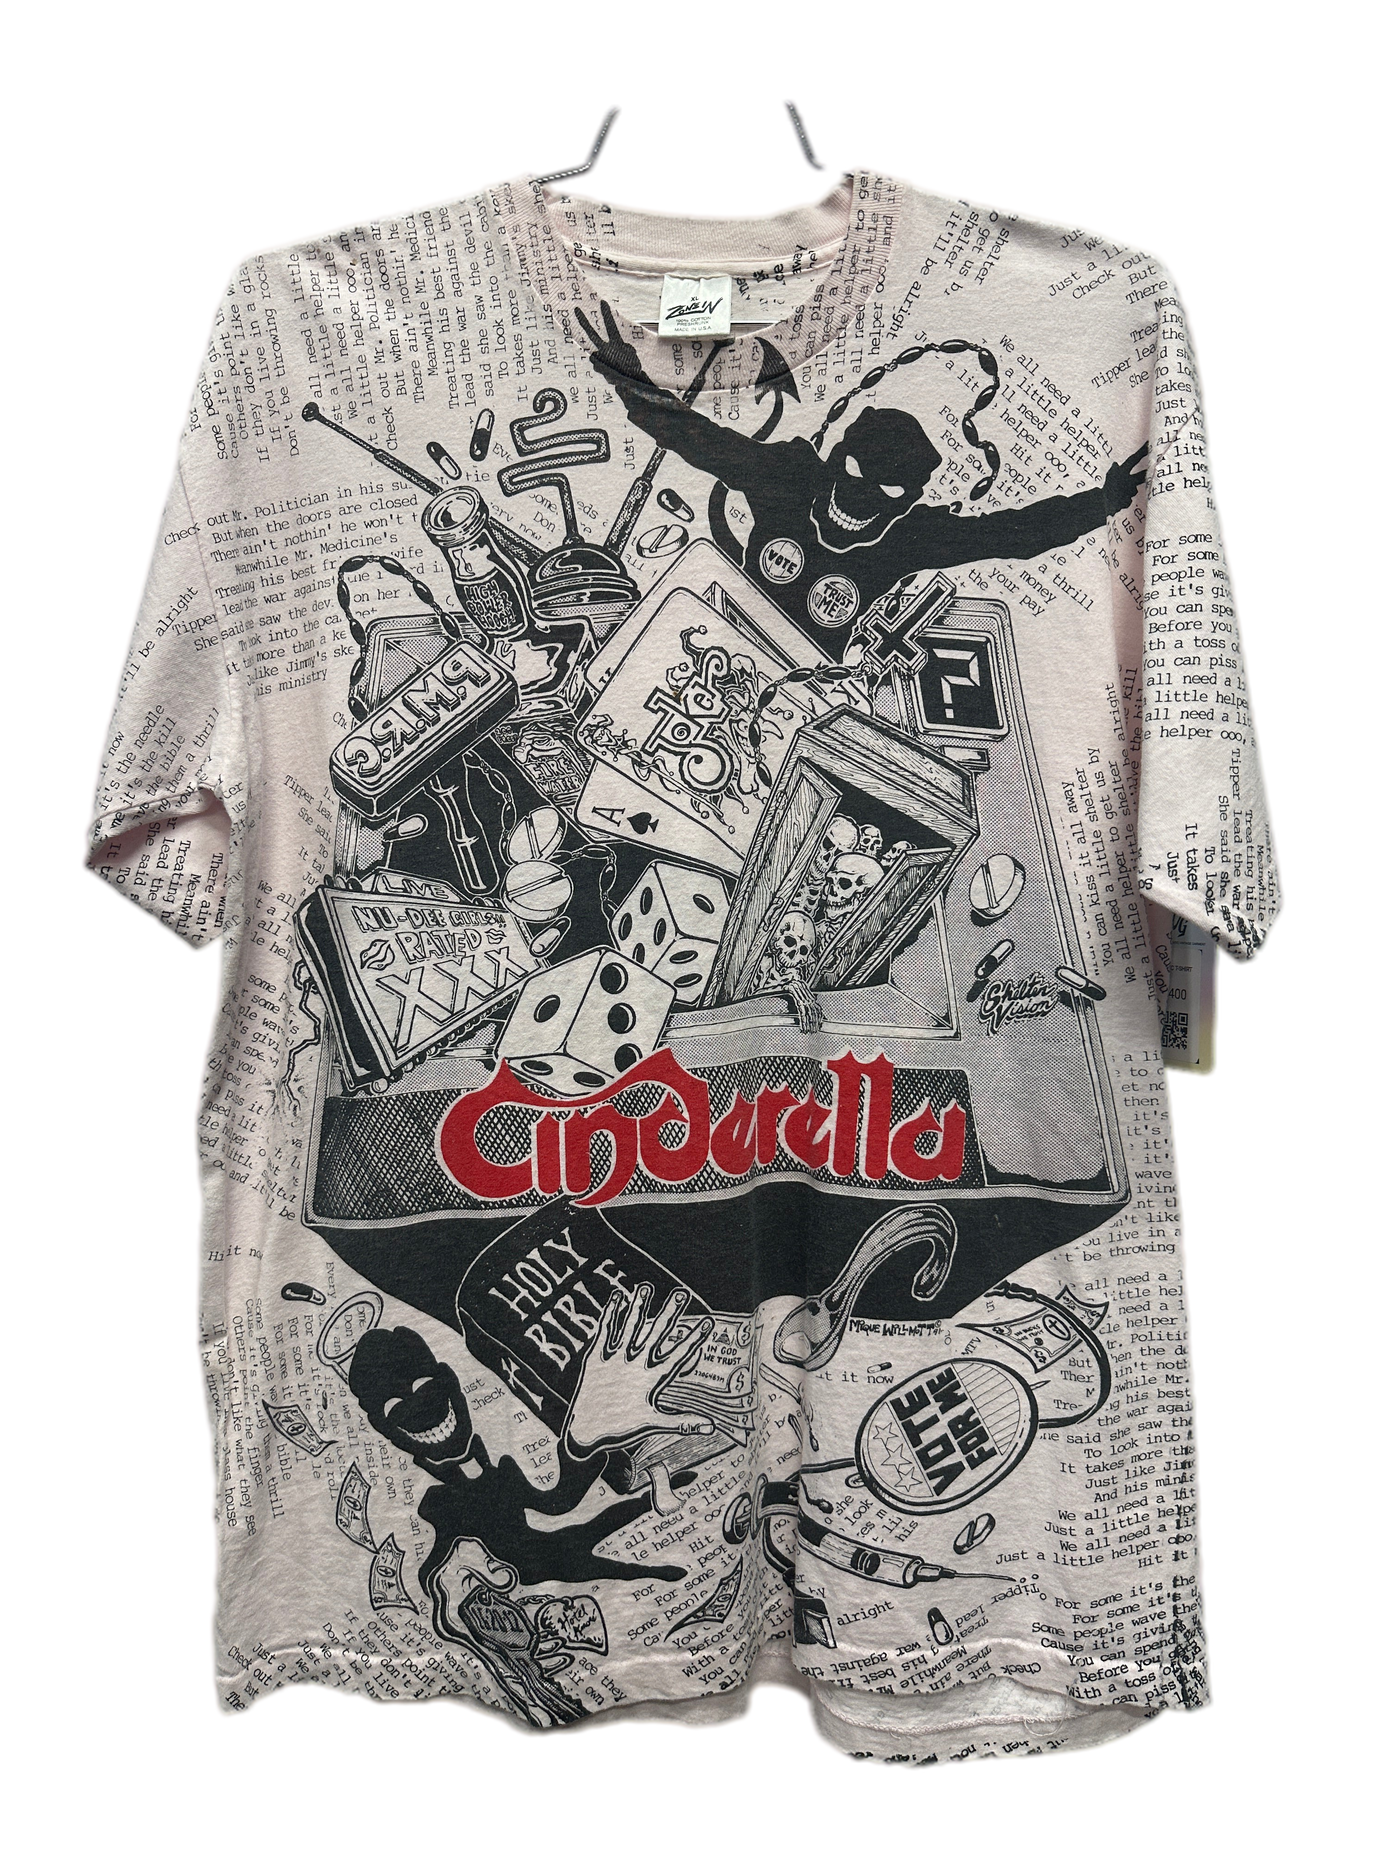 '91 Cinderella "Censorship is Unamerican!" White Music Shirt sz XL